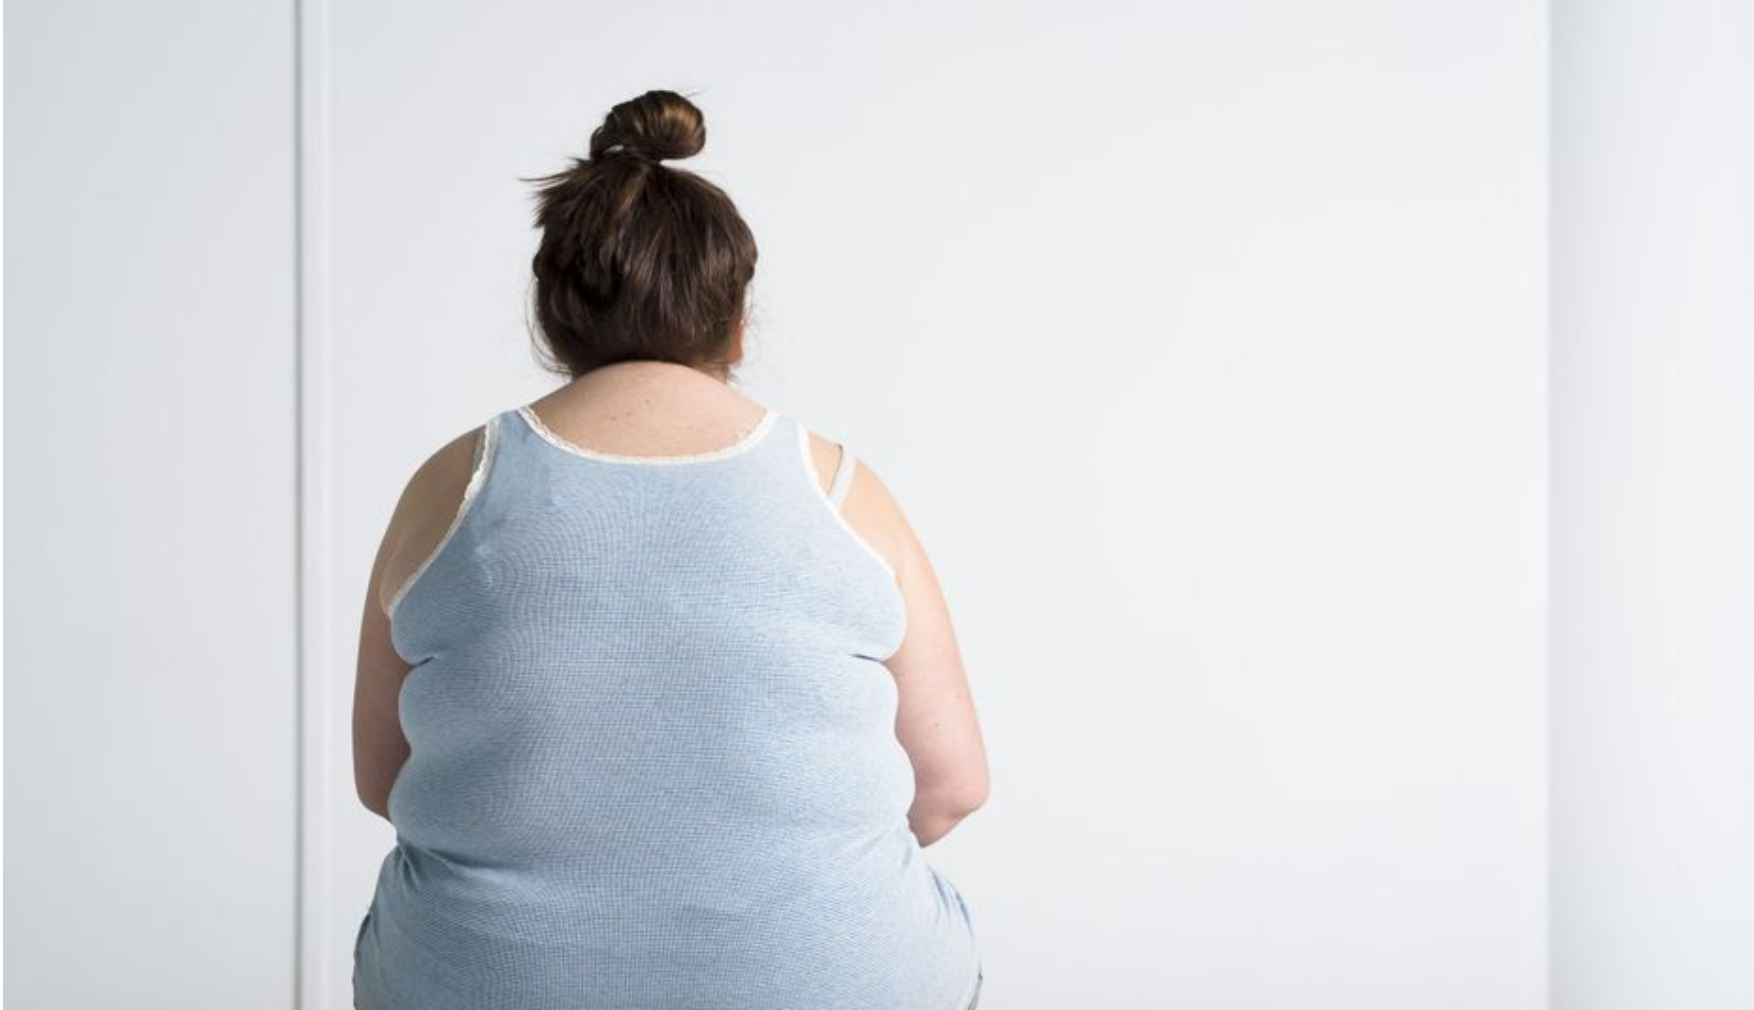 Obesidade: Causas, Sintomas, Tipos, Tratamento E Como Se Prevenir